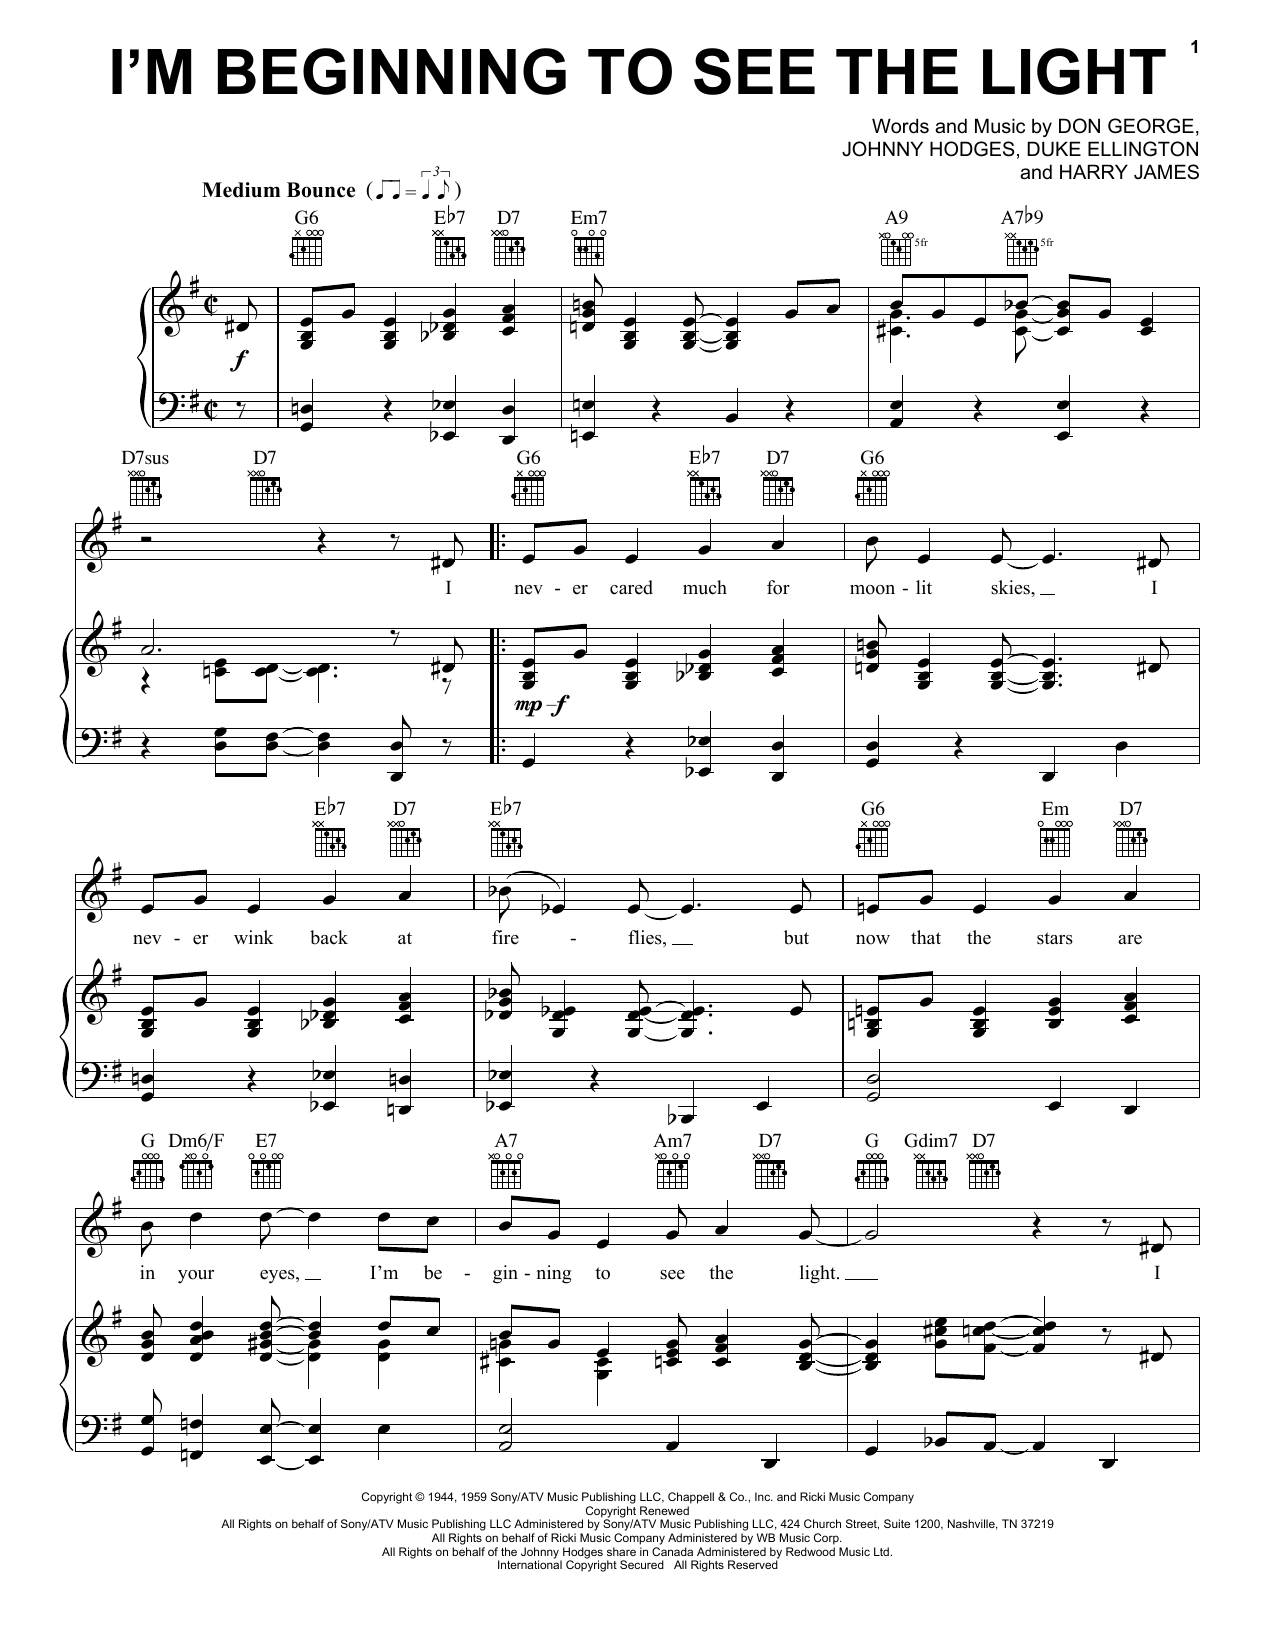 Duke Ellington I'm Beginning To See The Light Sheet Music Notes & Chords for Alto Saxophone - Download or Print PDF